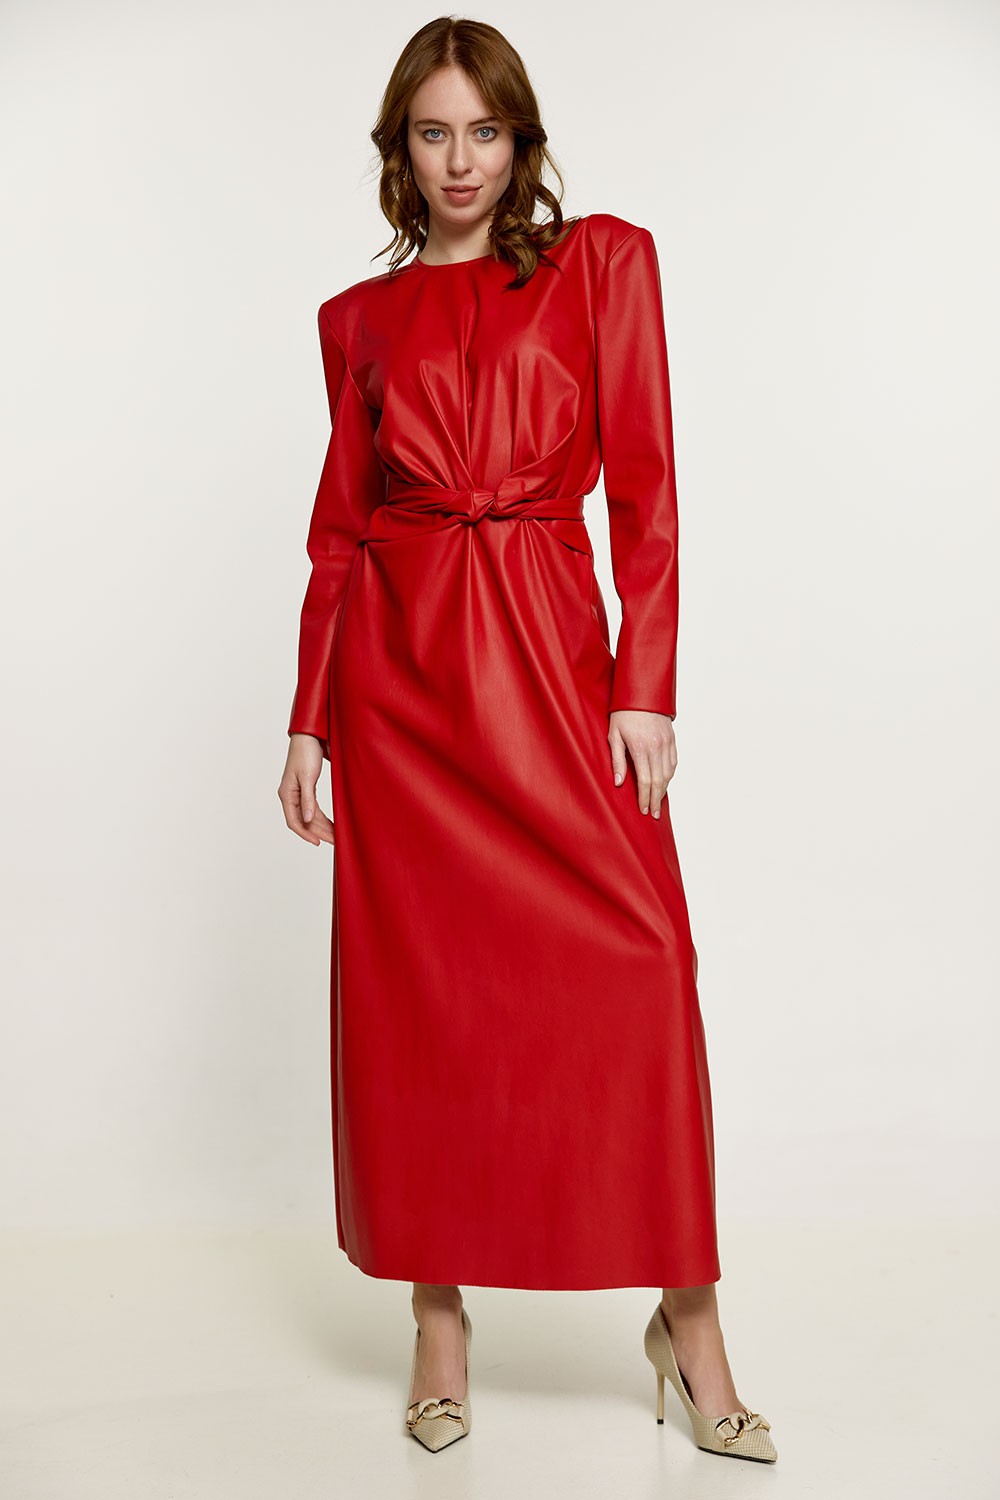 Milkwhite red leather dress